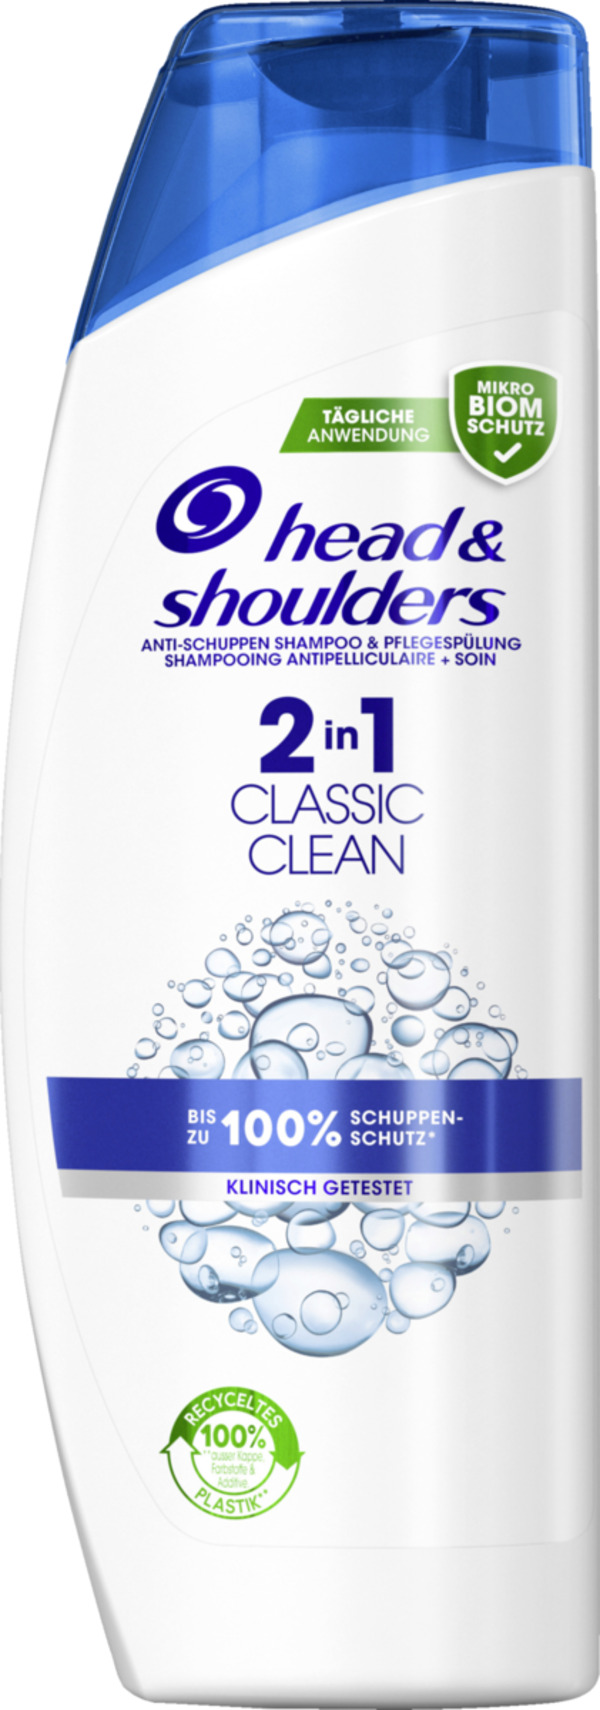 Bild 1 von head & shoulders Anti Schuppen Shampoo 2in1 Classic Clean